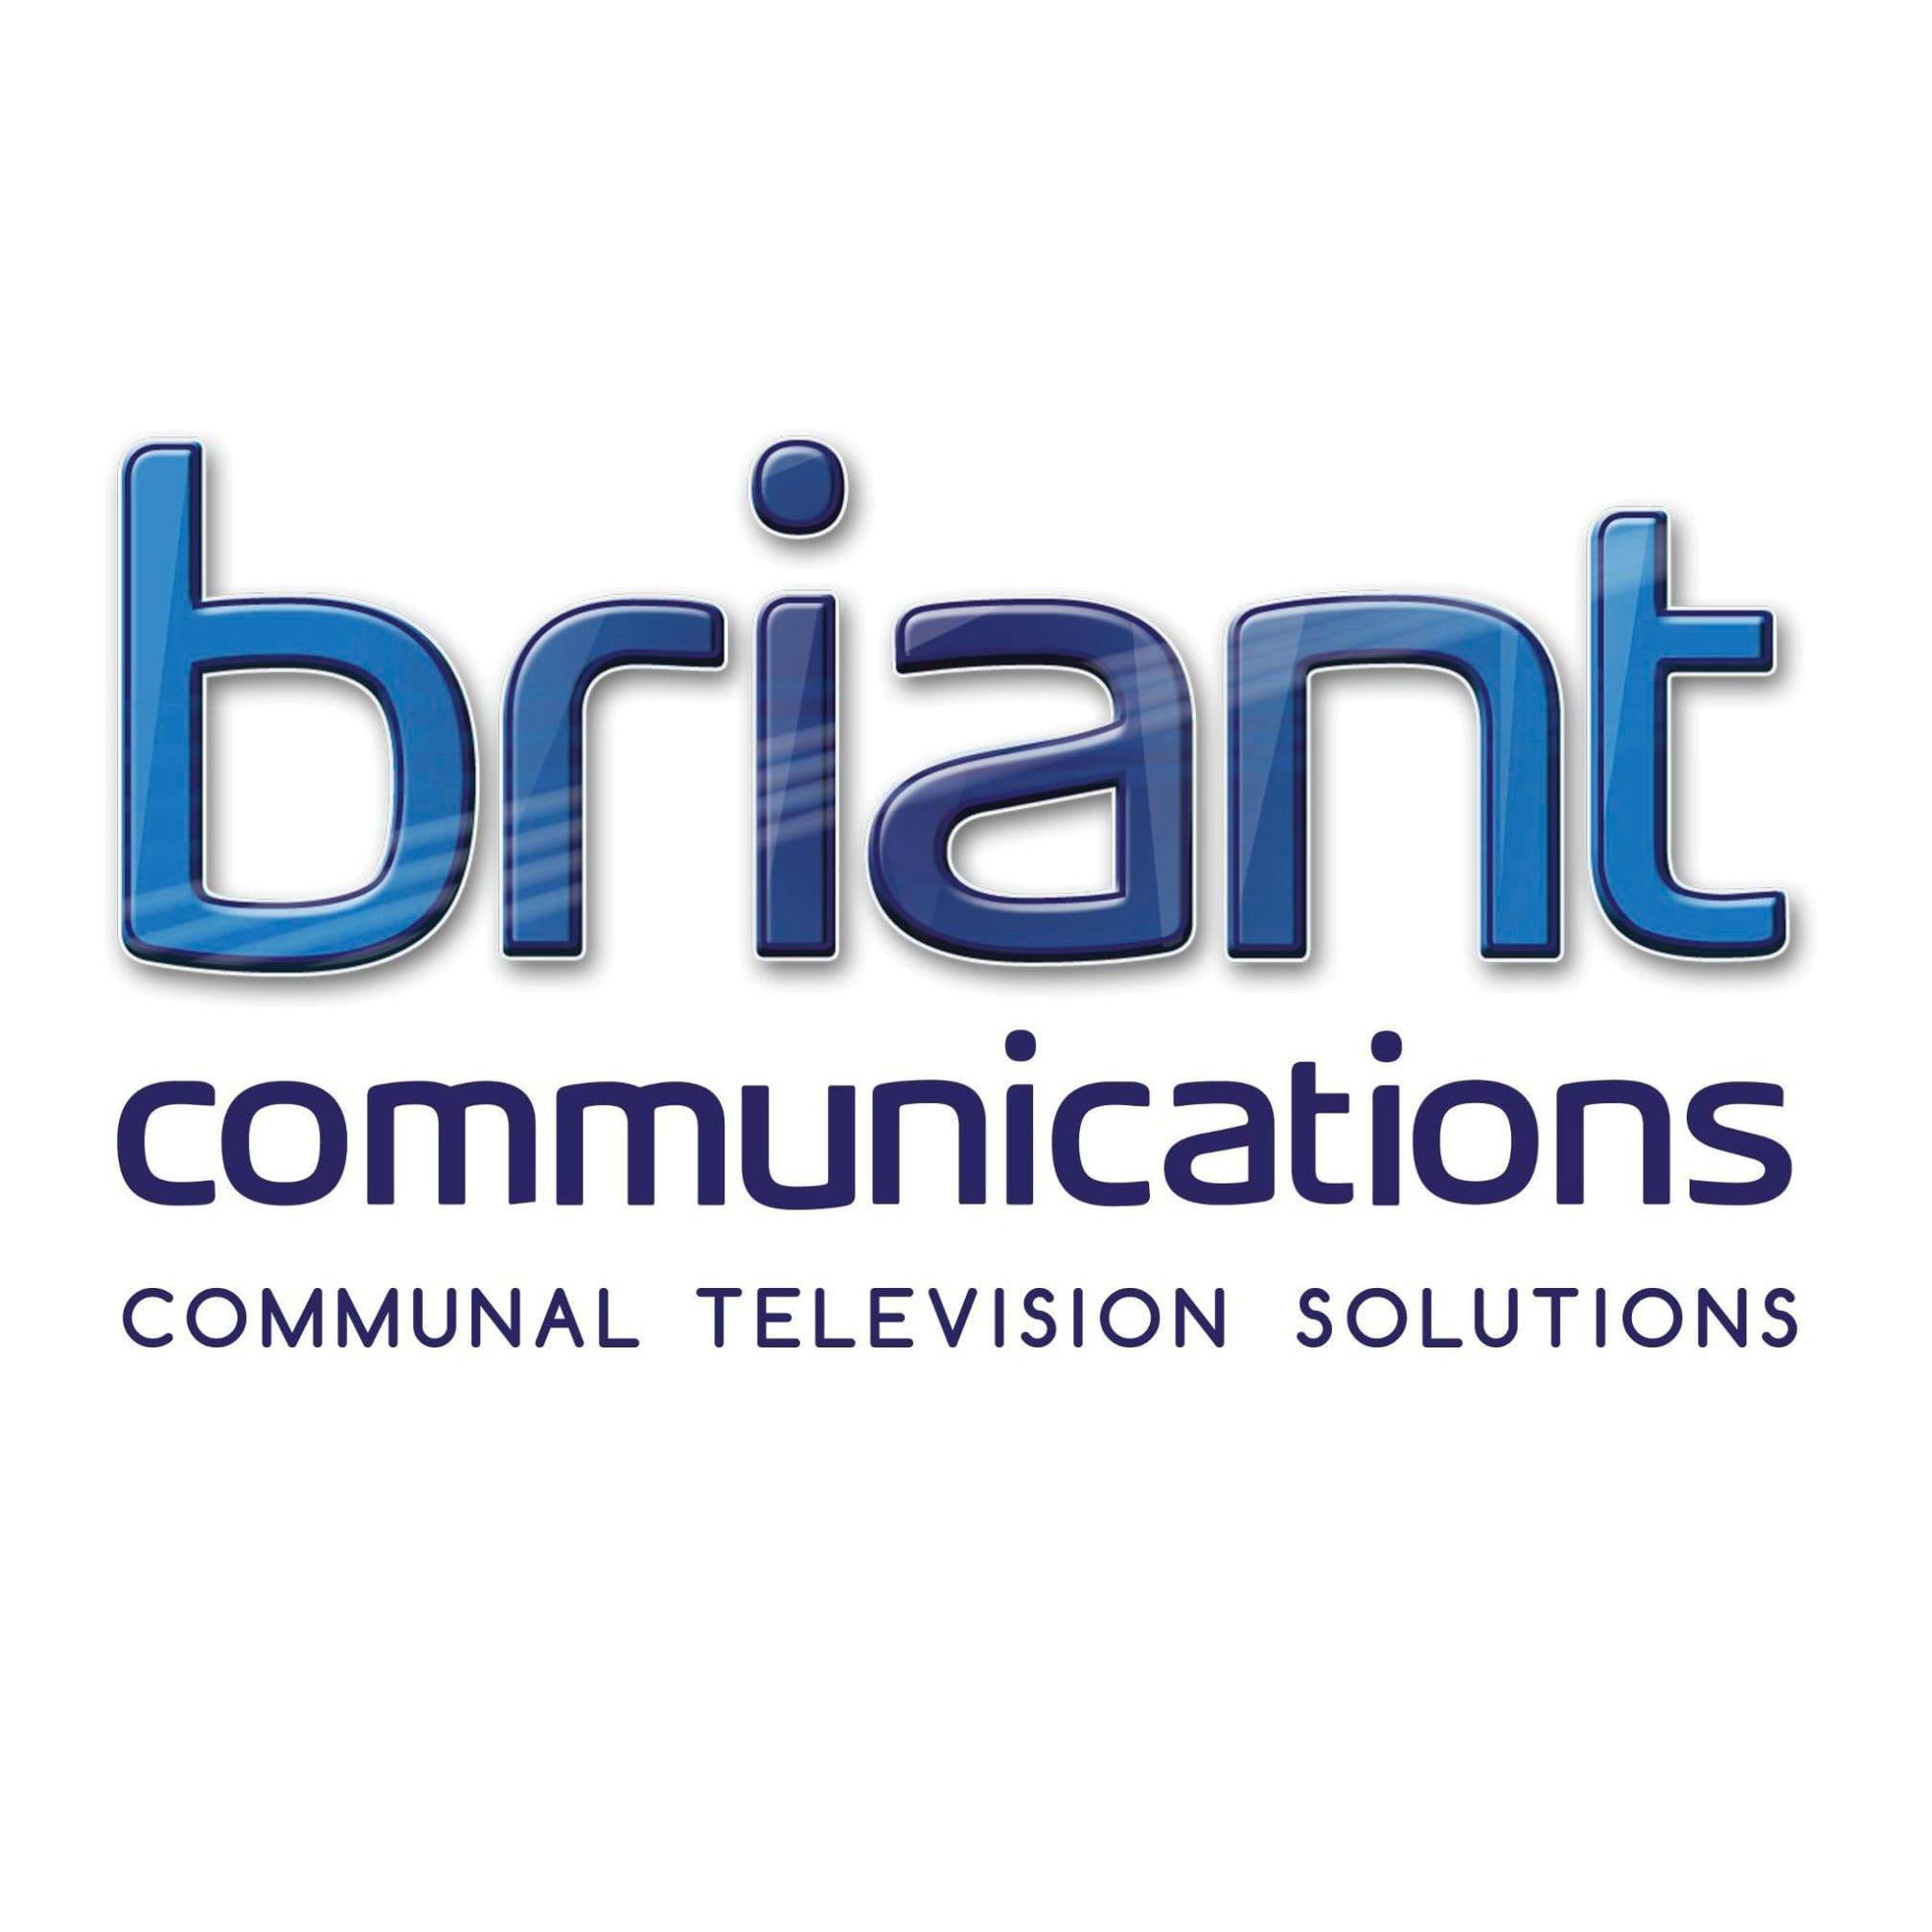 Briant Communications Sussex Ltd Logo